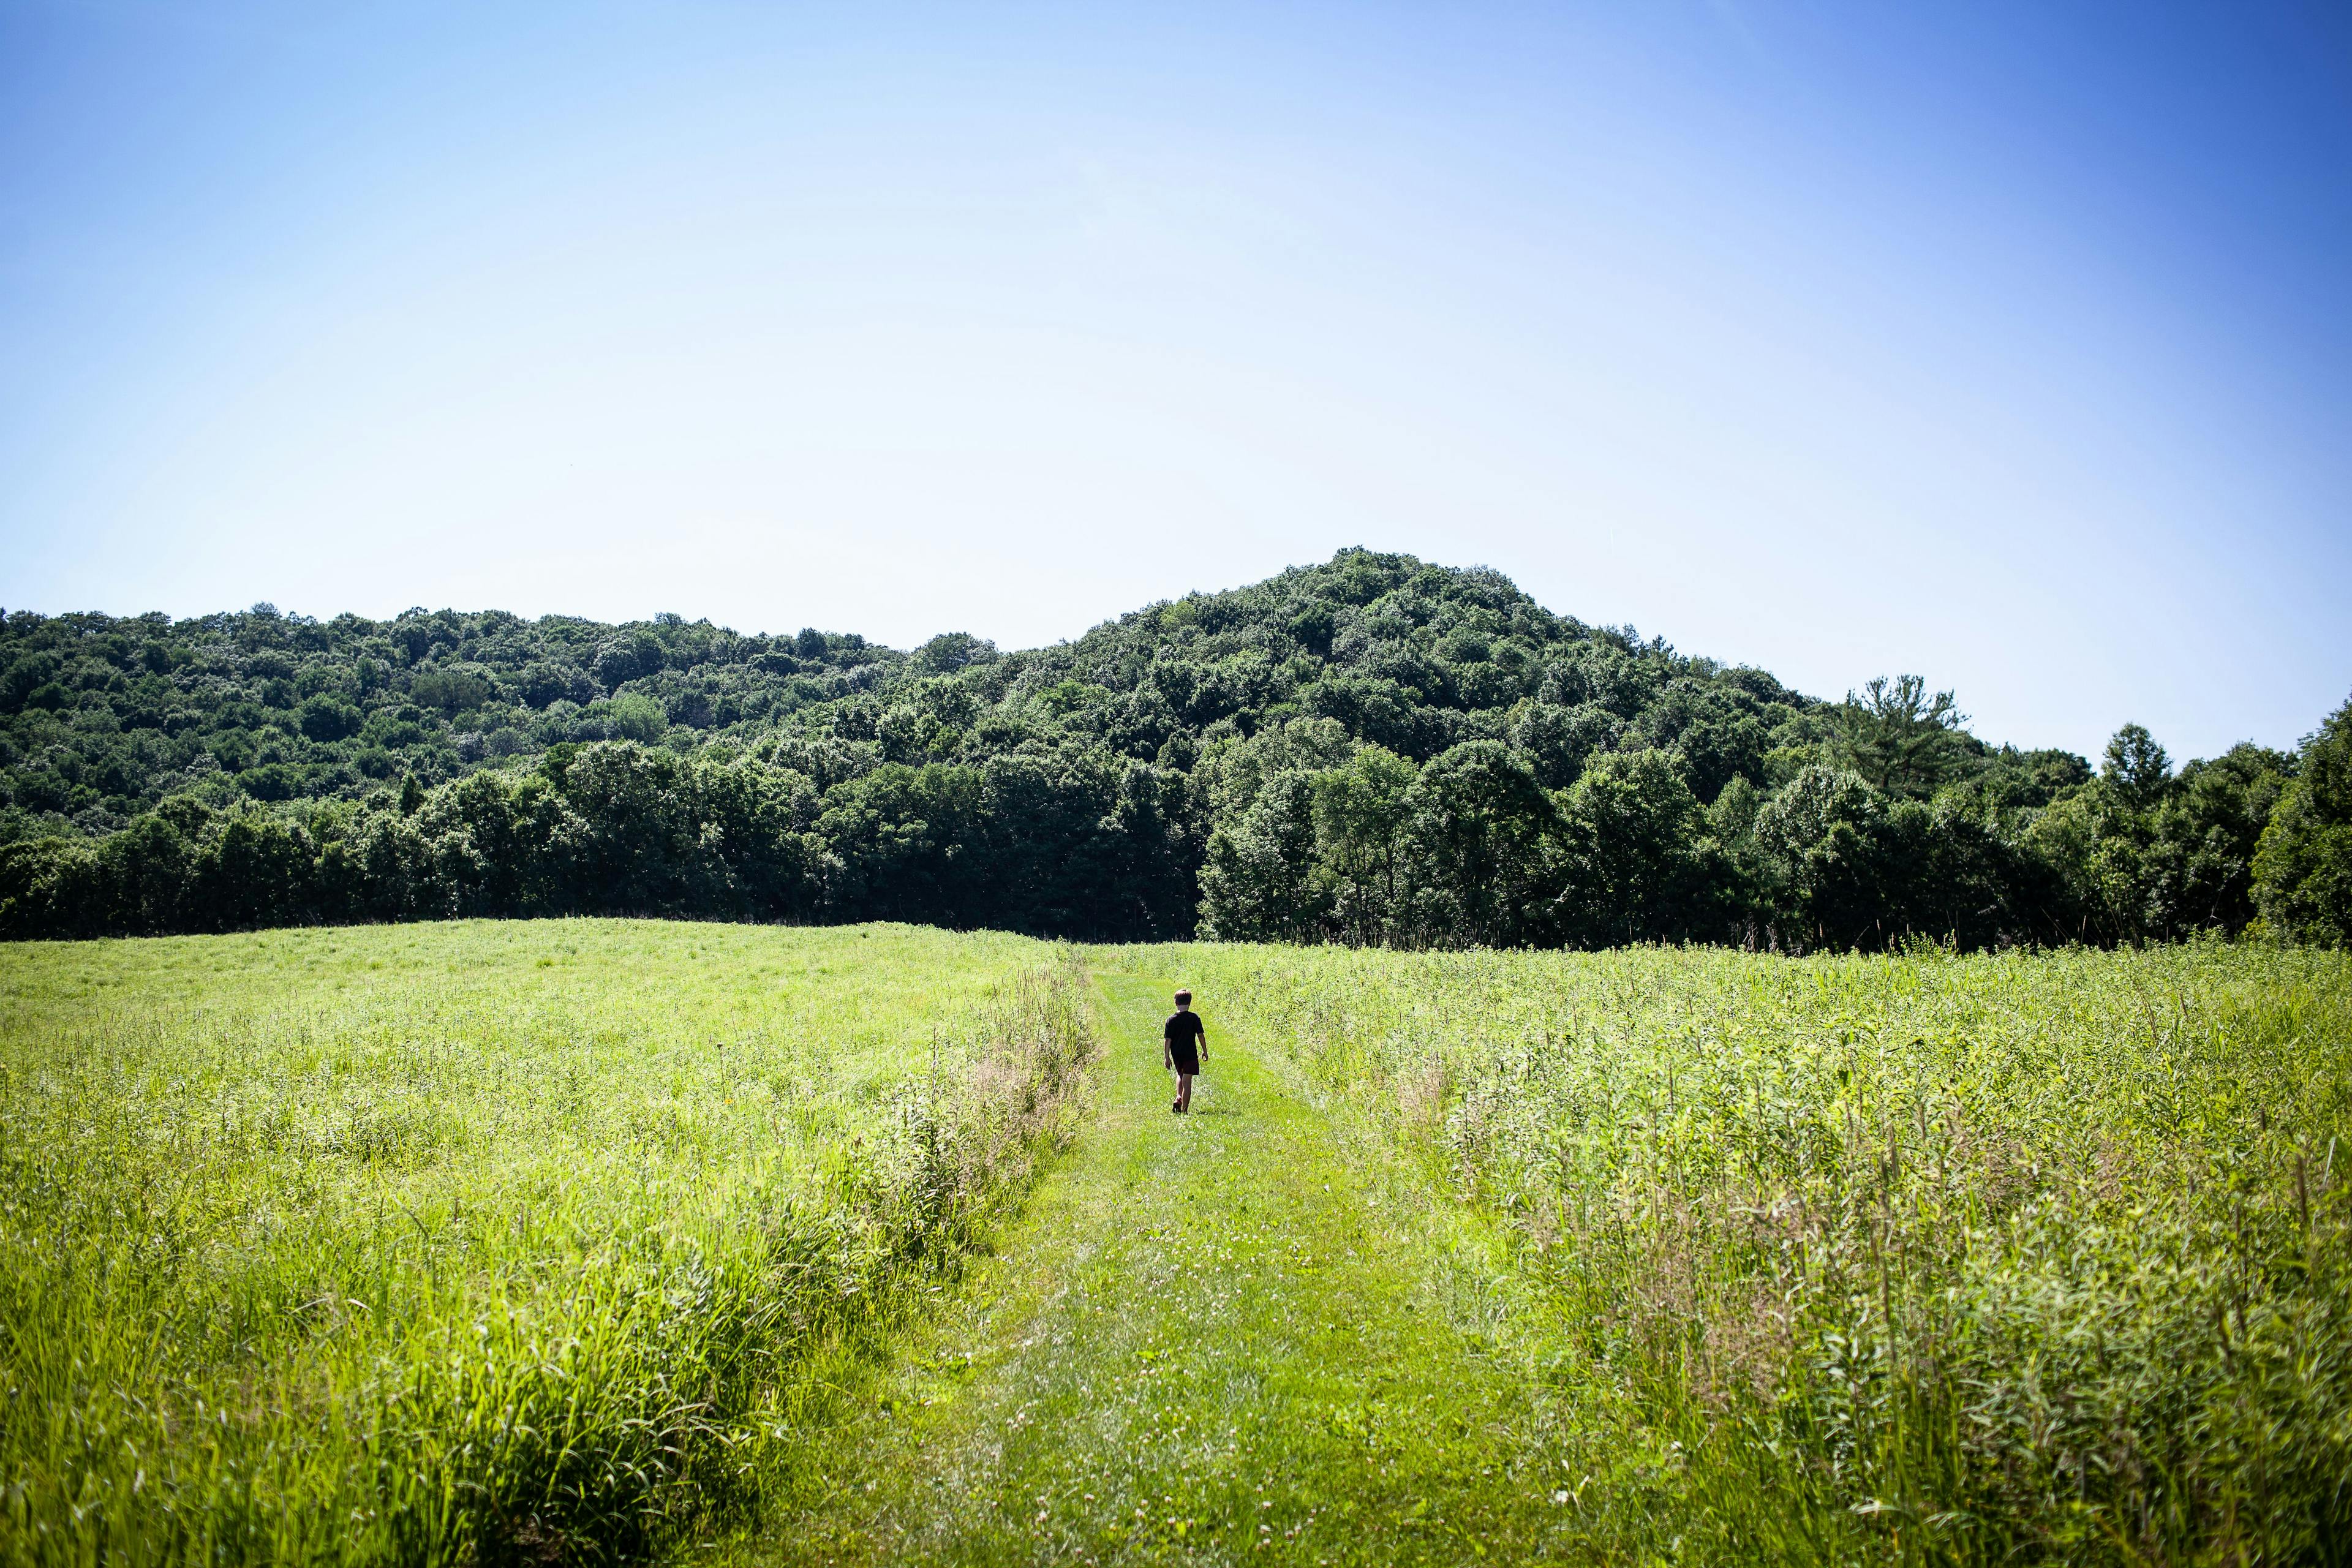 A boy walks a trail through a grassy field toward tree-covered hills.